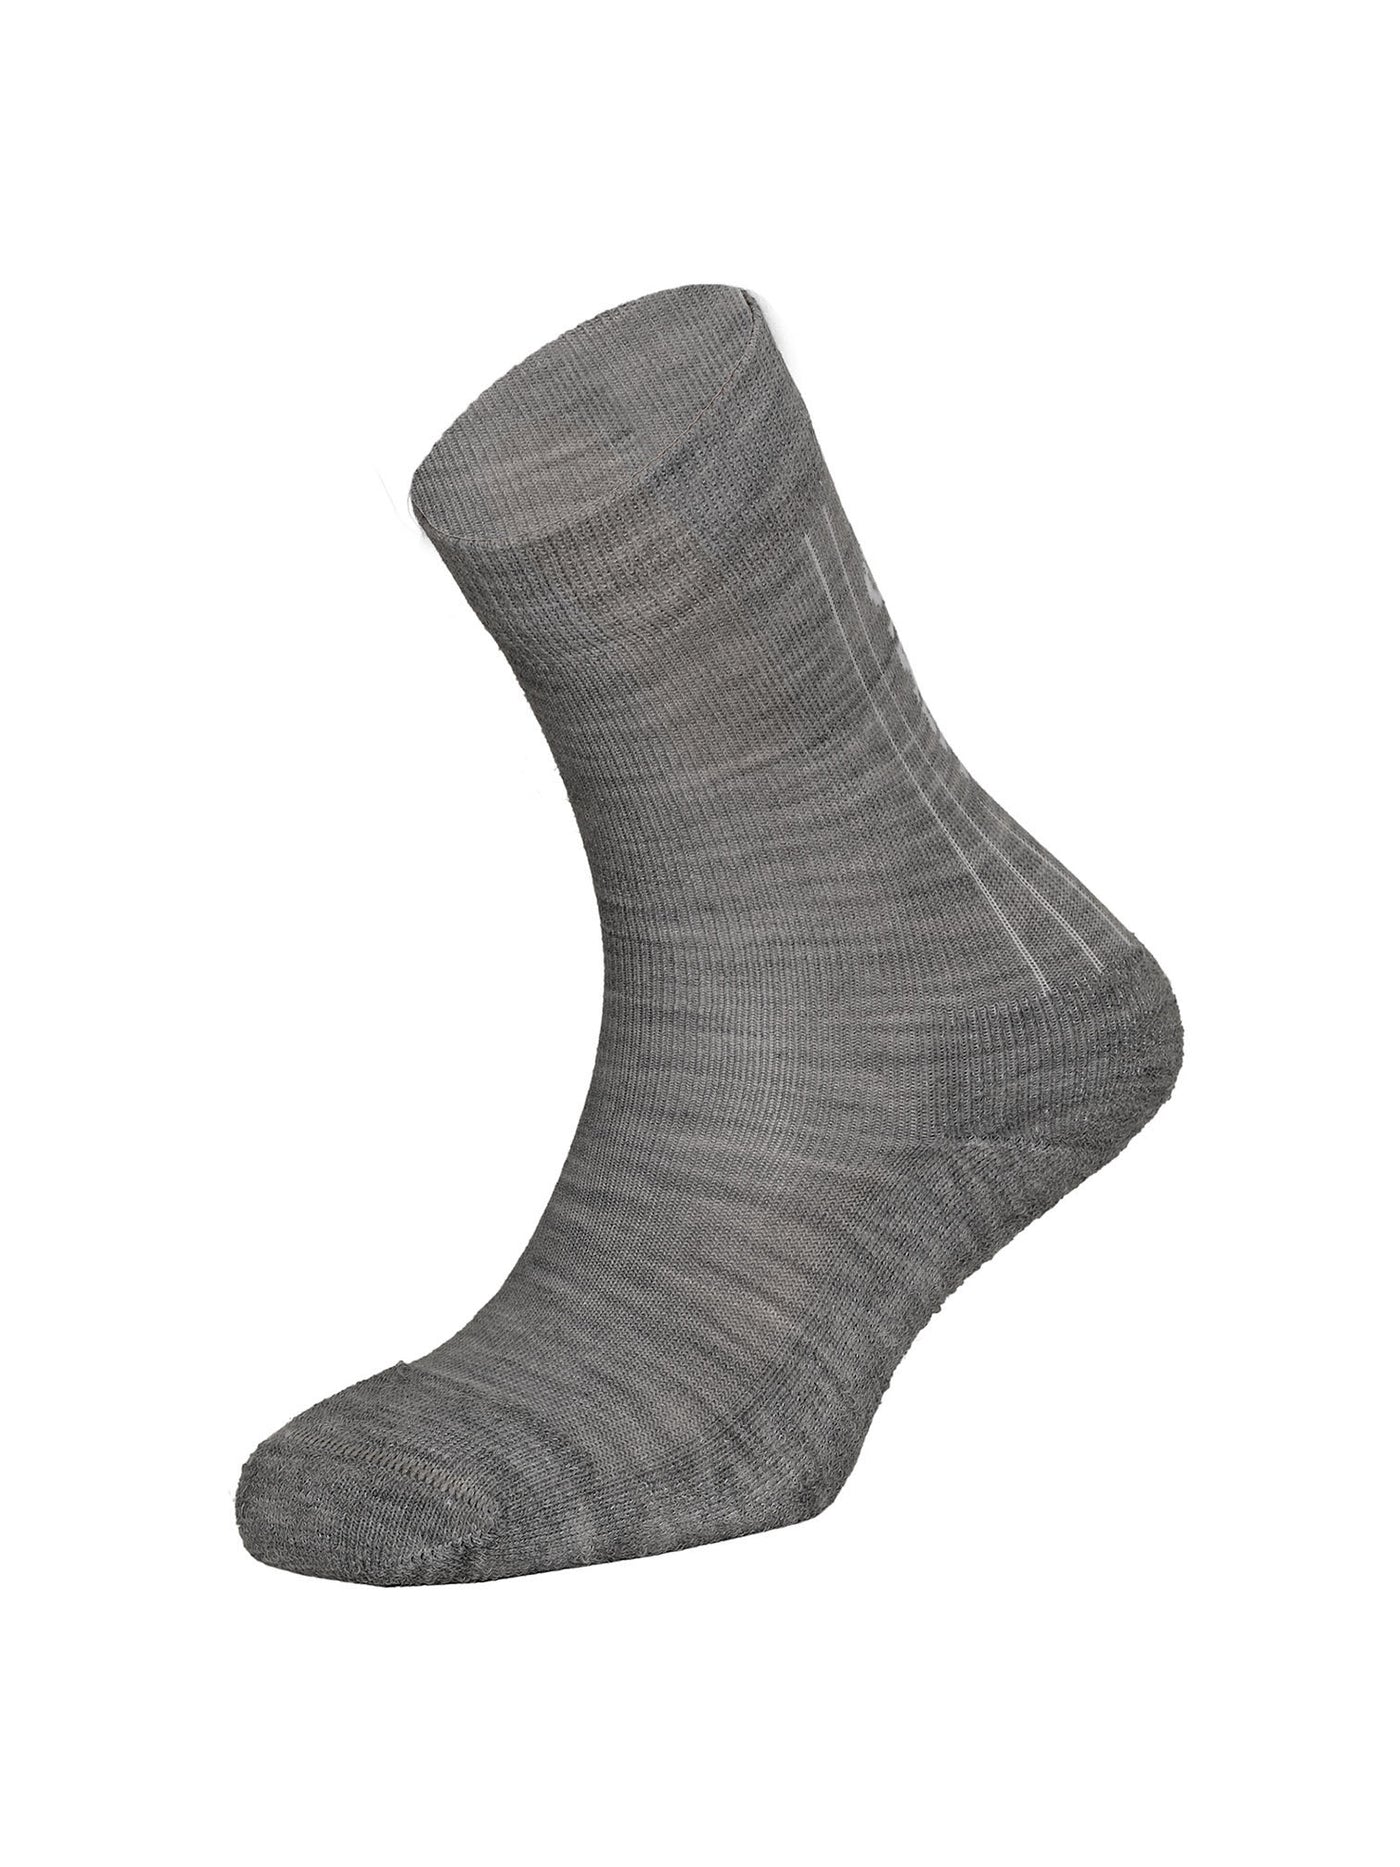 Hiking Socks - Merino wool socks for children and teenagers